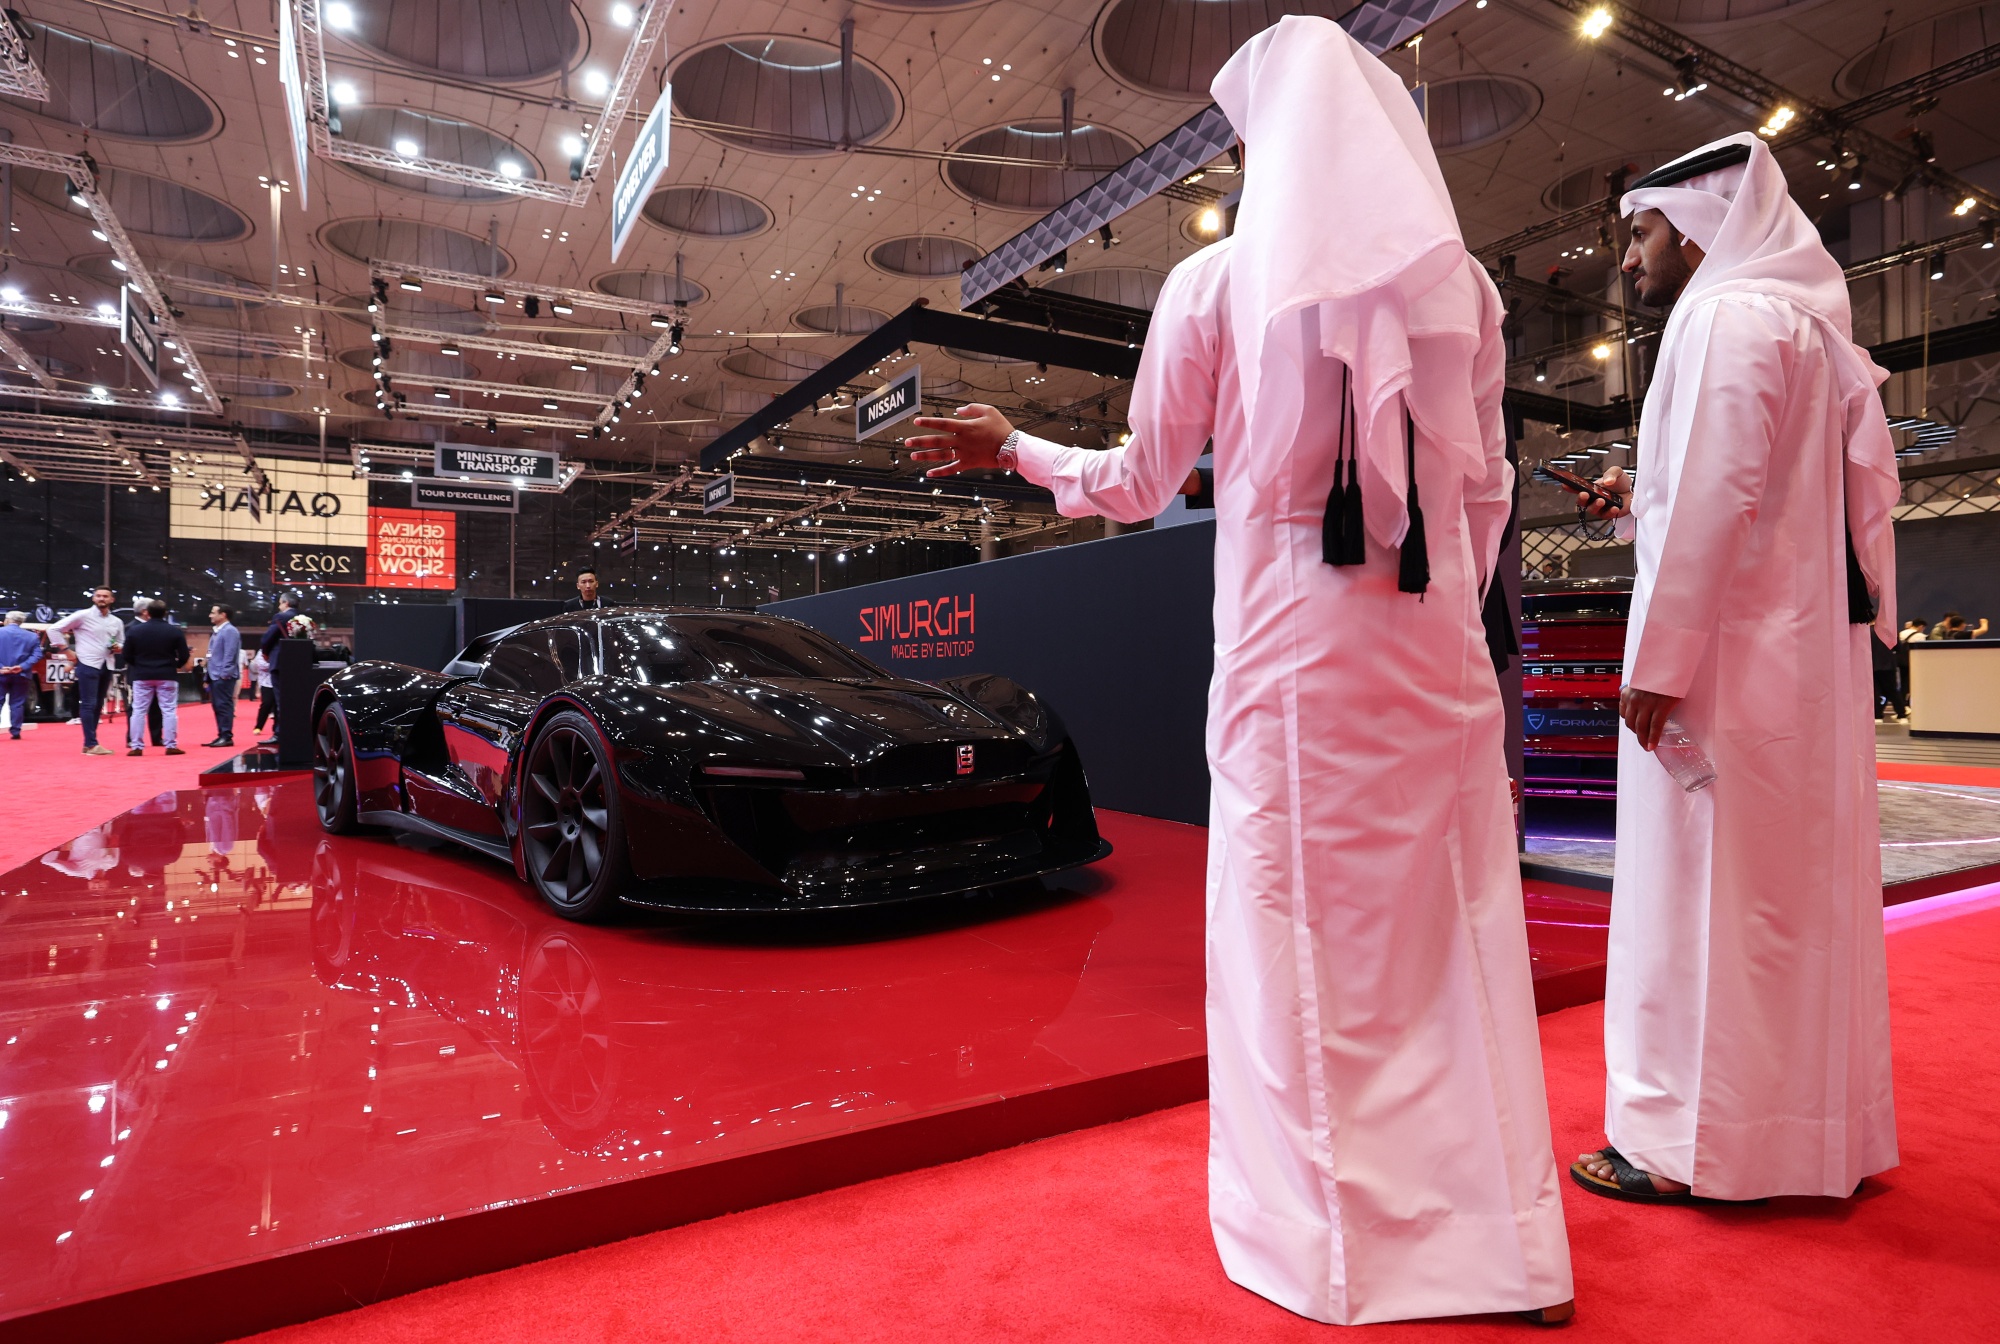 Attendees view the Entop Simurgh supercar&nbsp;at the Geneva International Motor Show Qatar 2023.